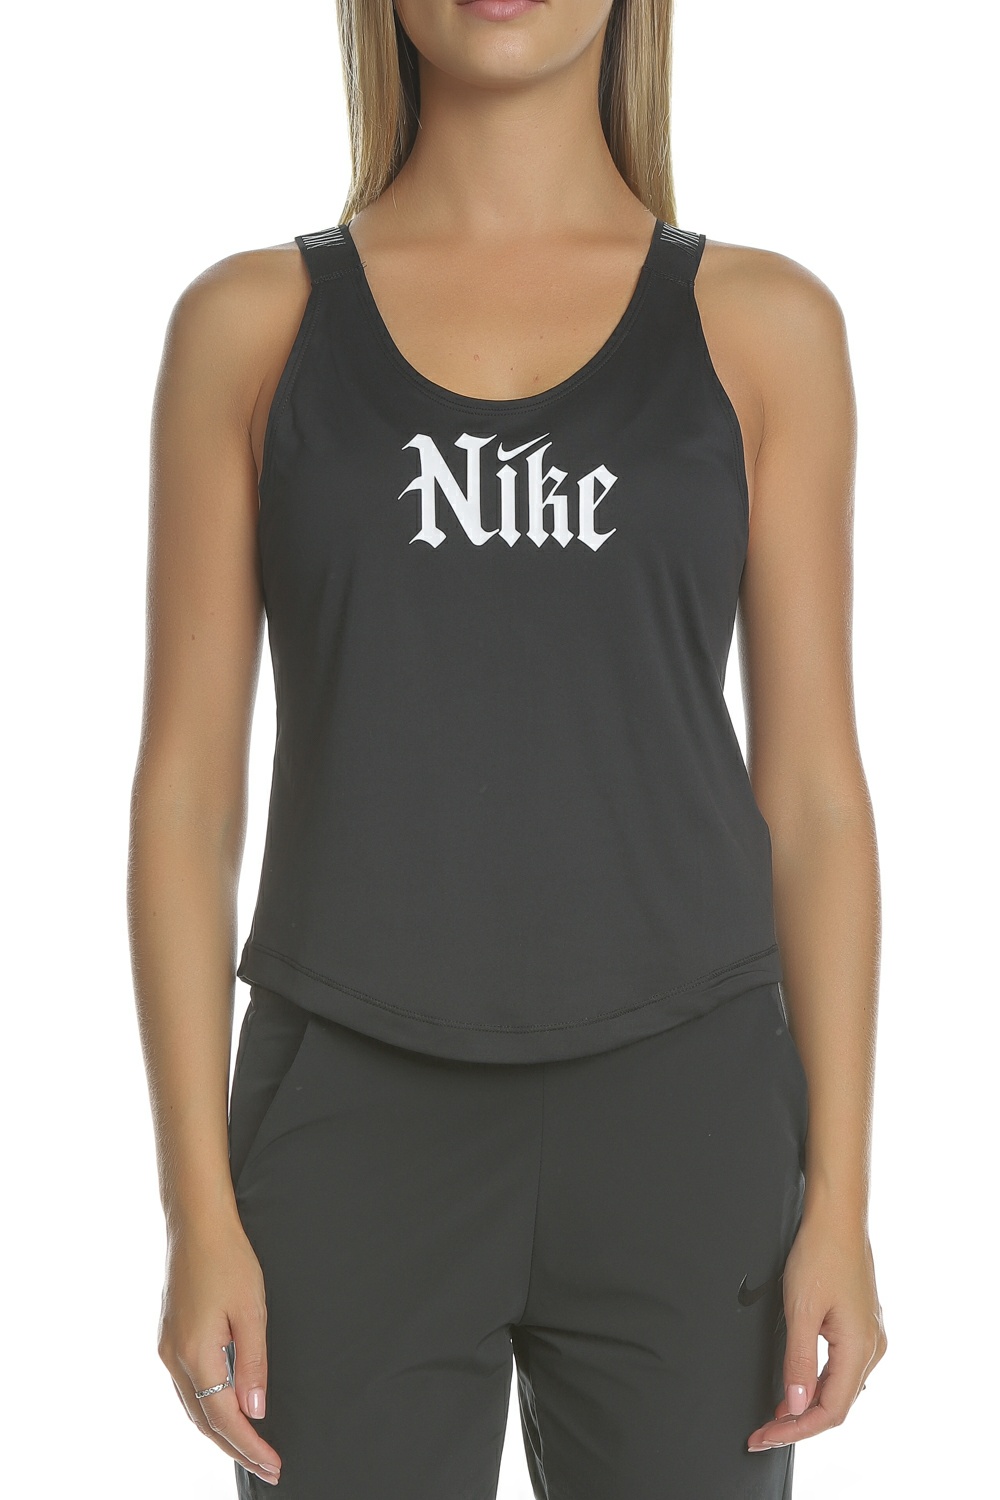 NIKE - Γυναικεία αμάνικη μπλούζα NIKE DRY TANK ELSTKA CROP GRX μαύρη Γυναικεία/Ρούχα/Αθλητικά/T-shirt-Τοπ